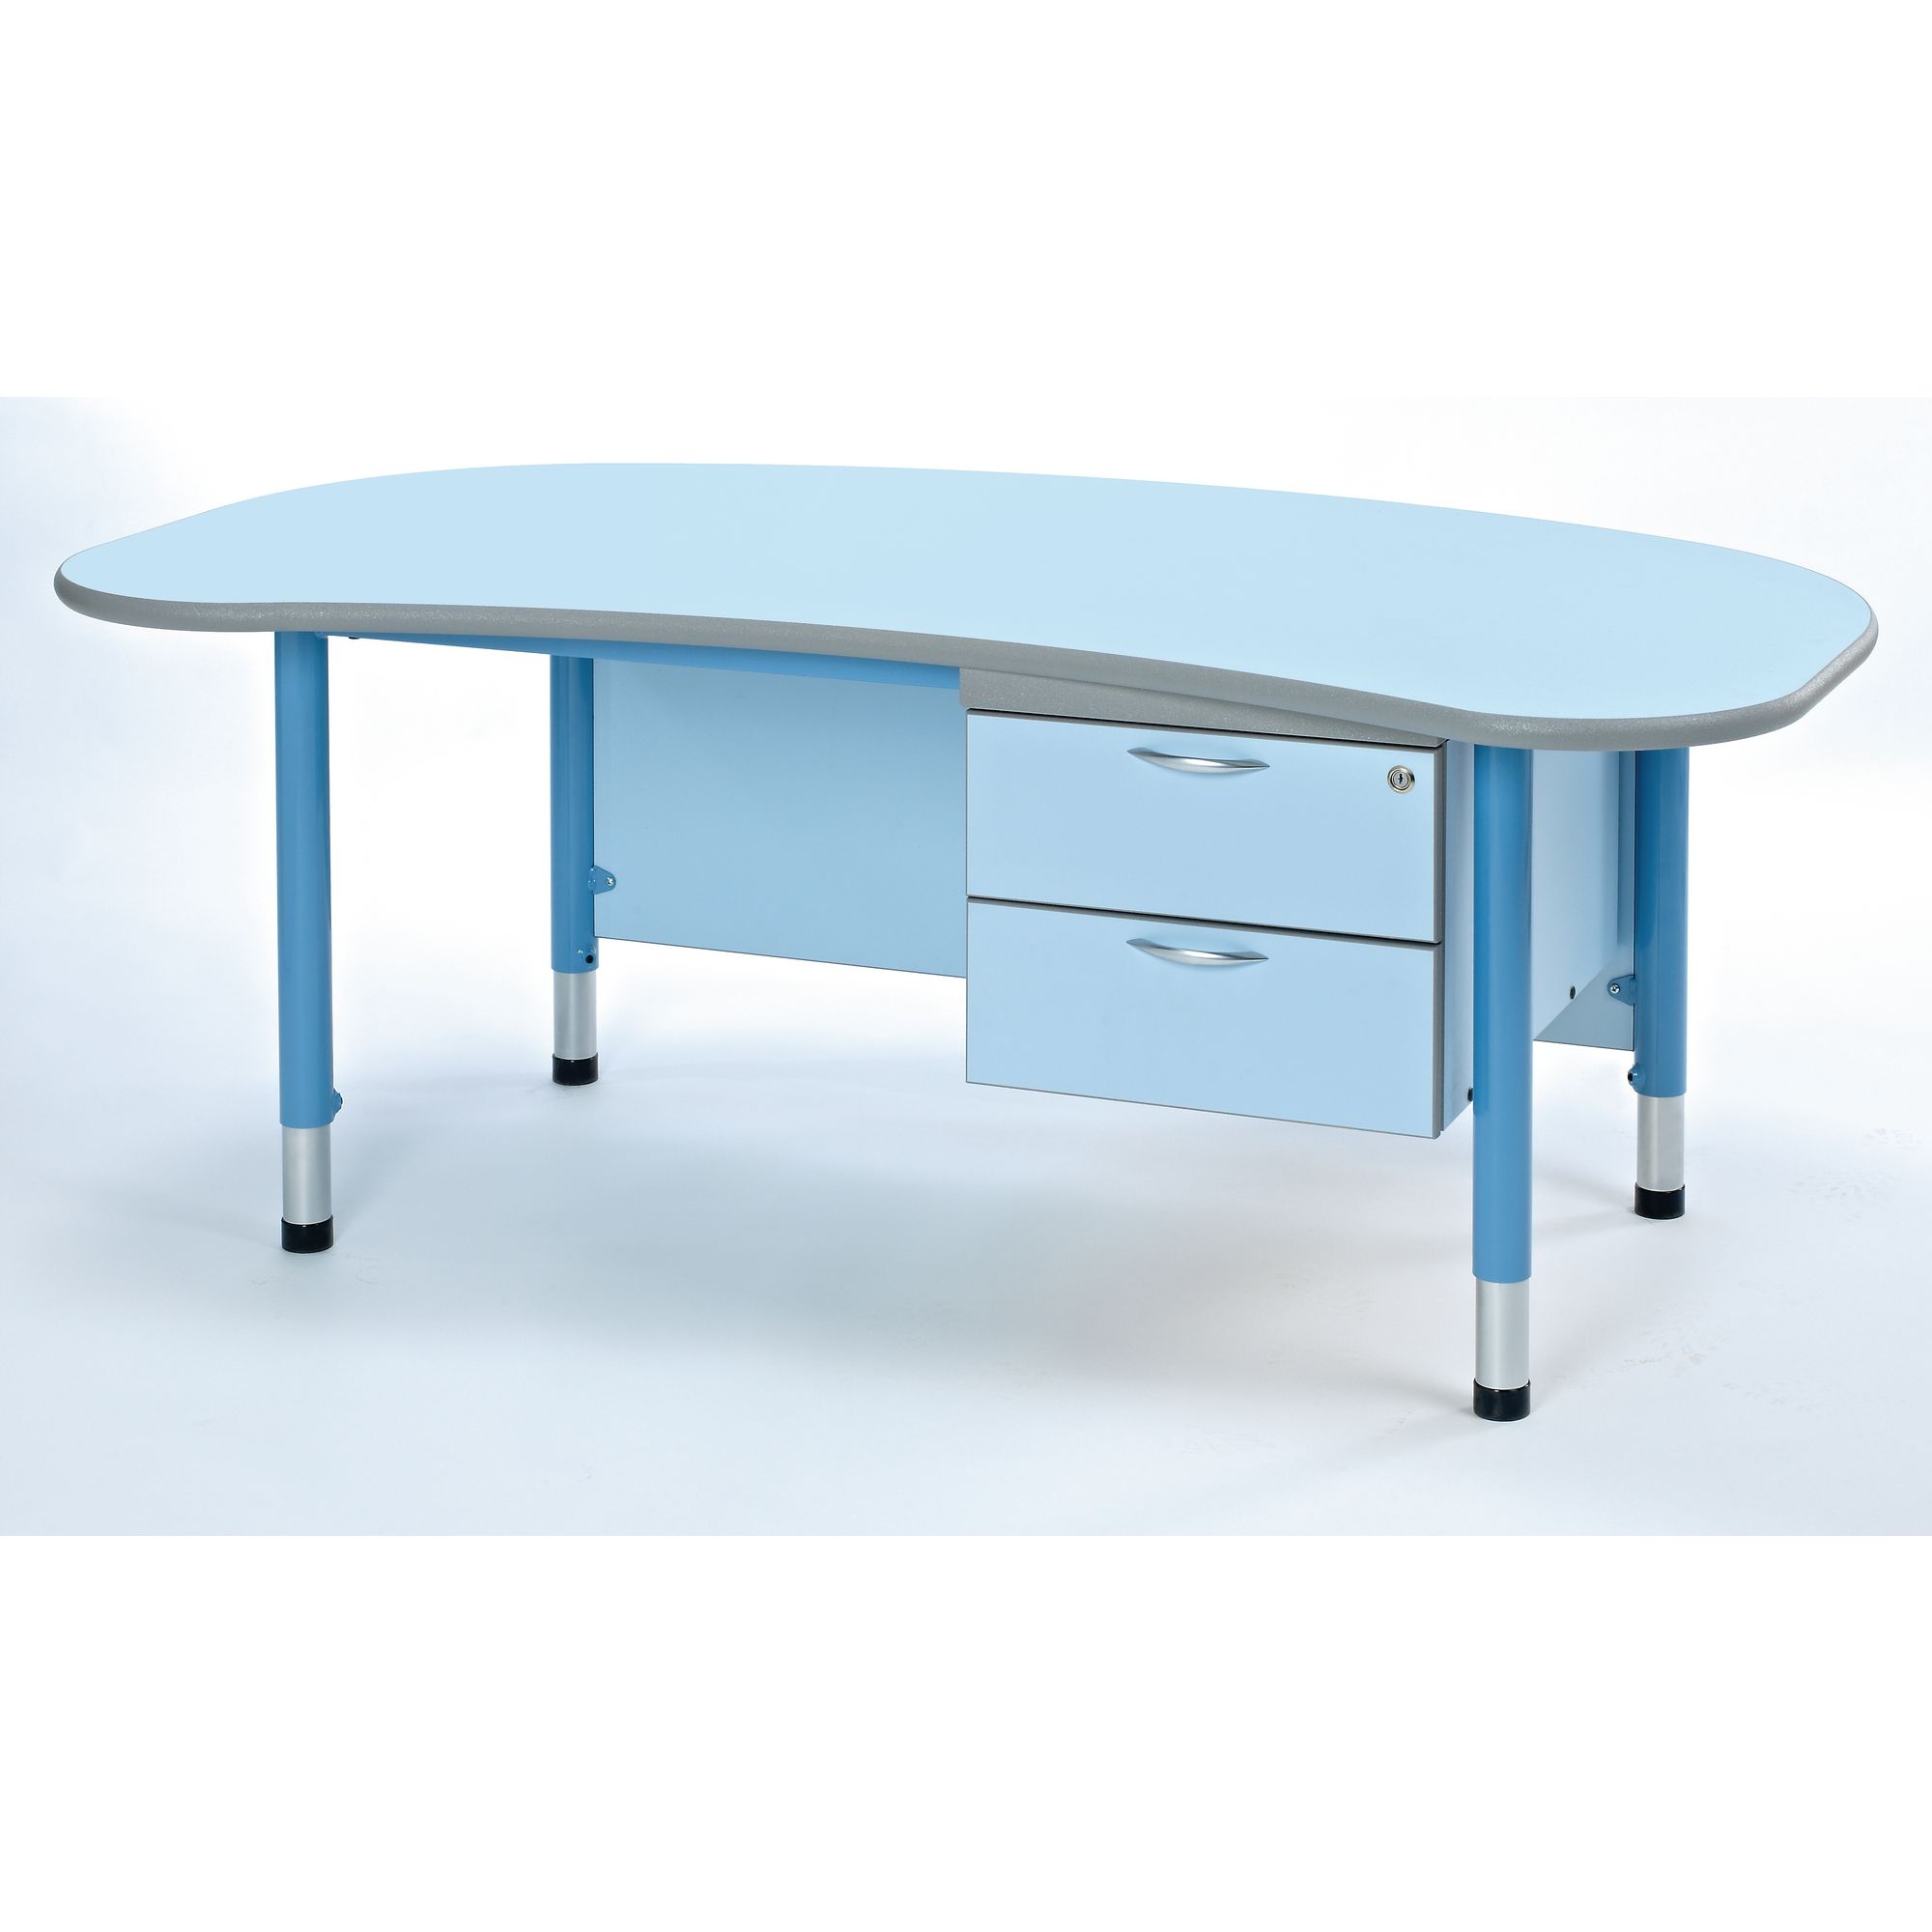 Harlequin Arc Height Adjustable Steel Teachers Table - 1600 x 900 x 400 to 640mm - Soft Blue